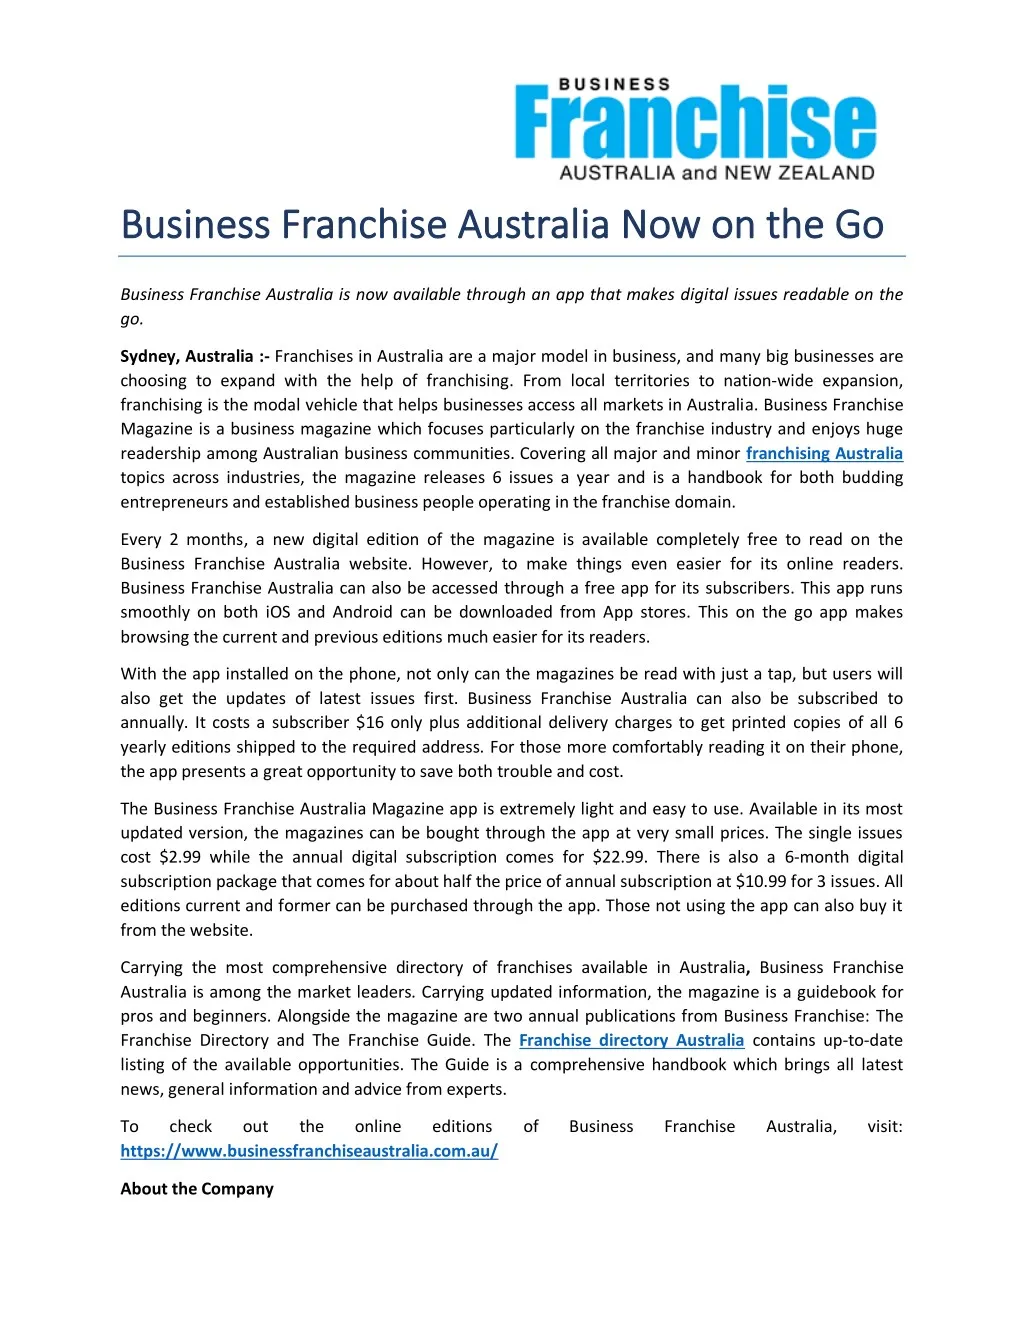 business franchise australia